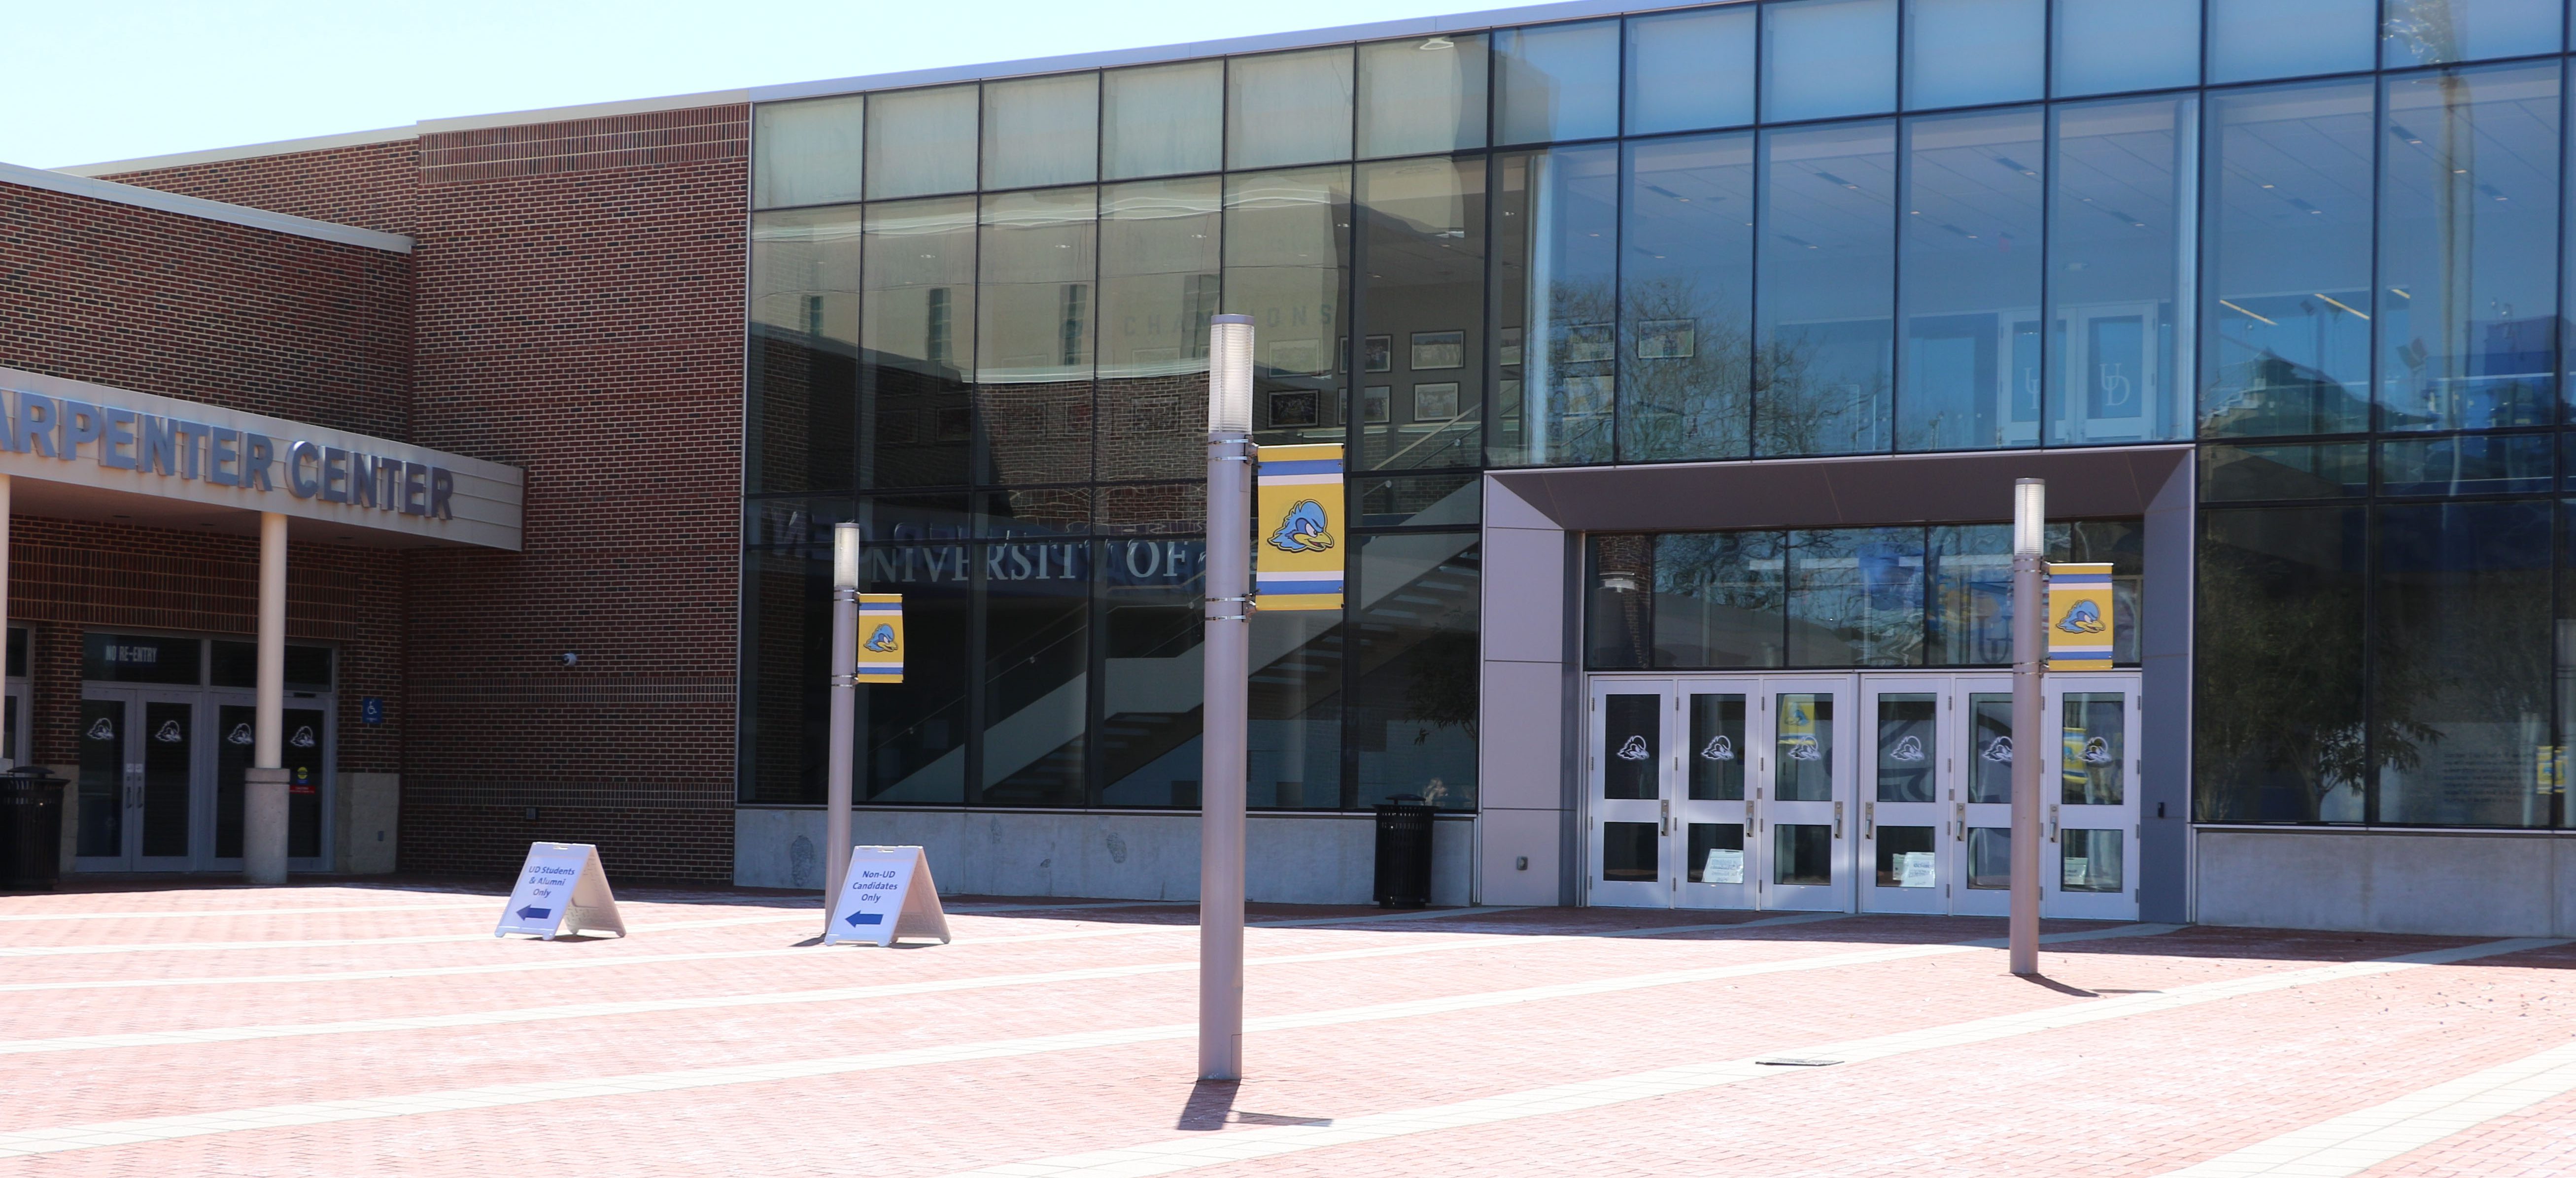 Entrance doors for PHD, EDD and Master's degree students at Bob Carpenter Center